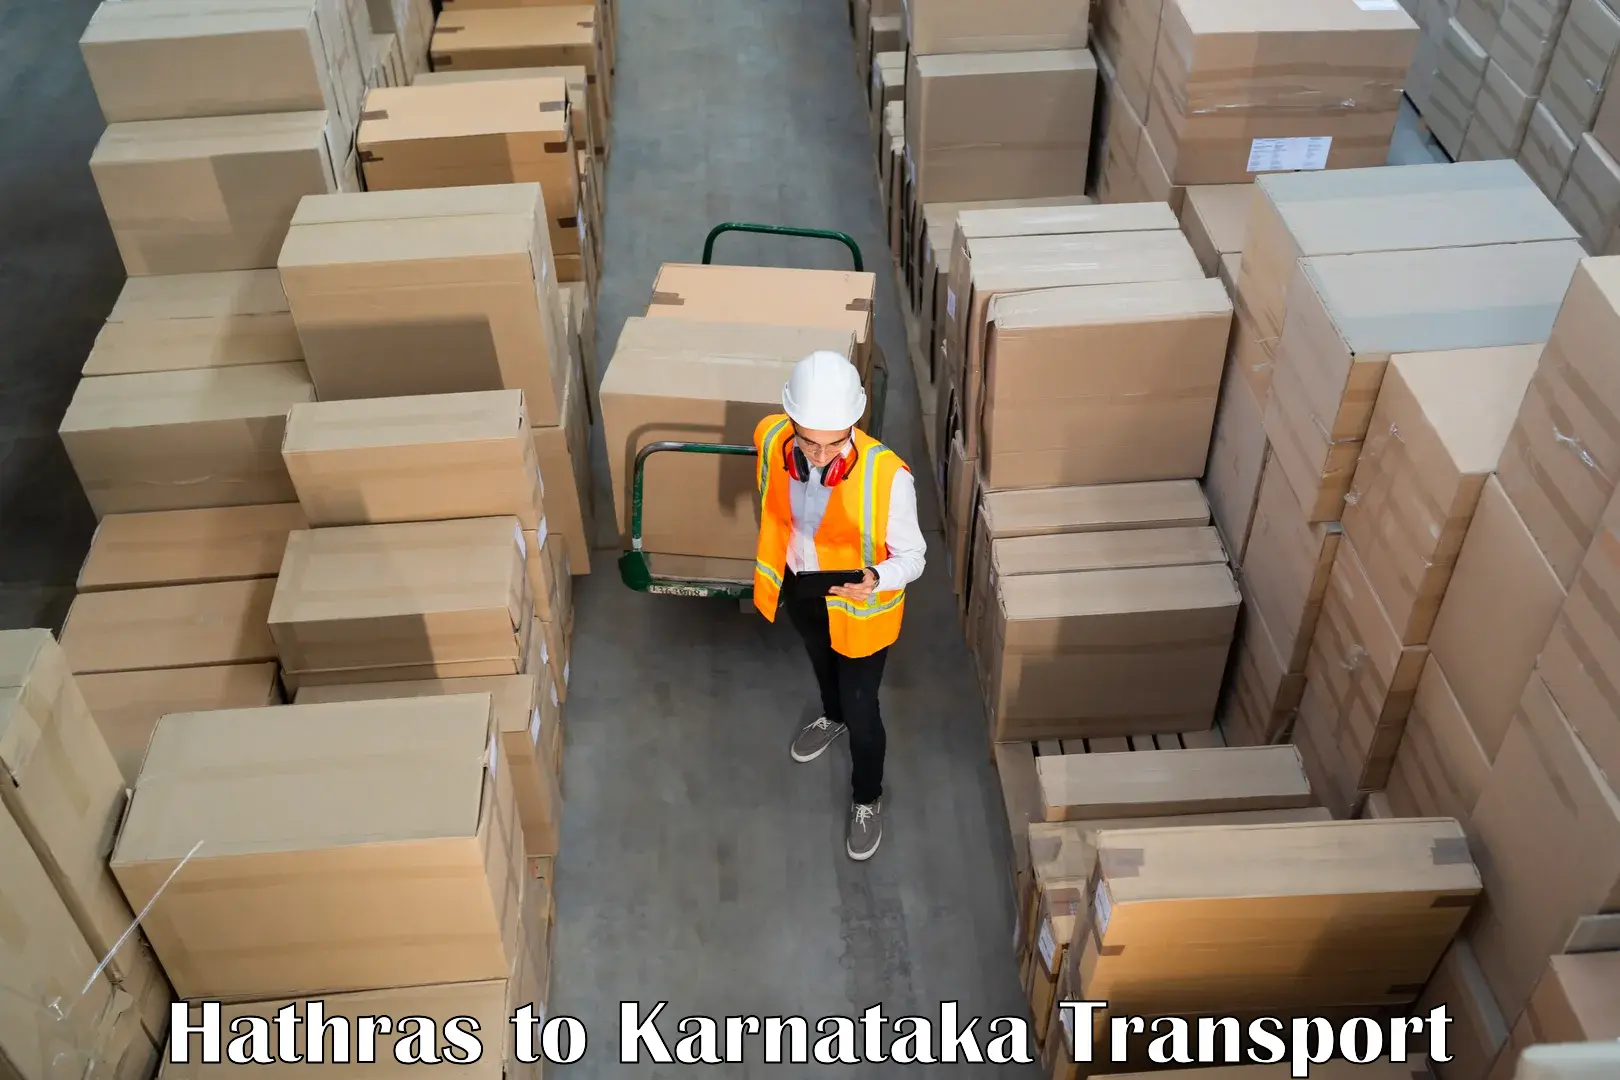 Truck transport companies in India Hathras to Karnataka